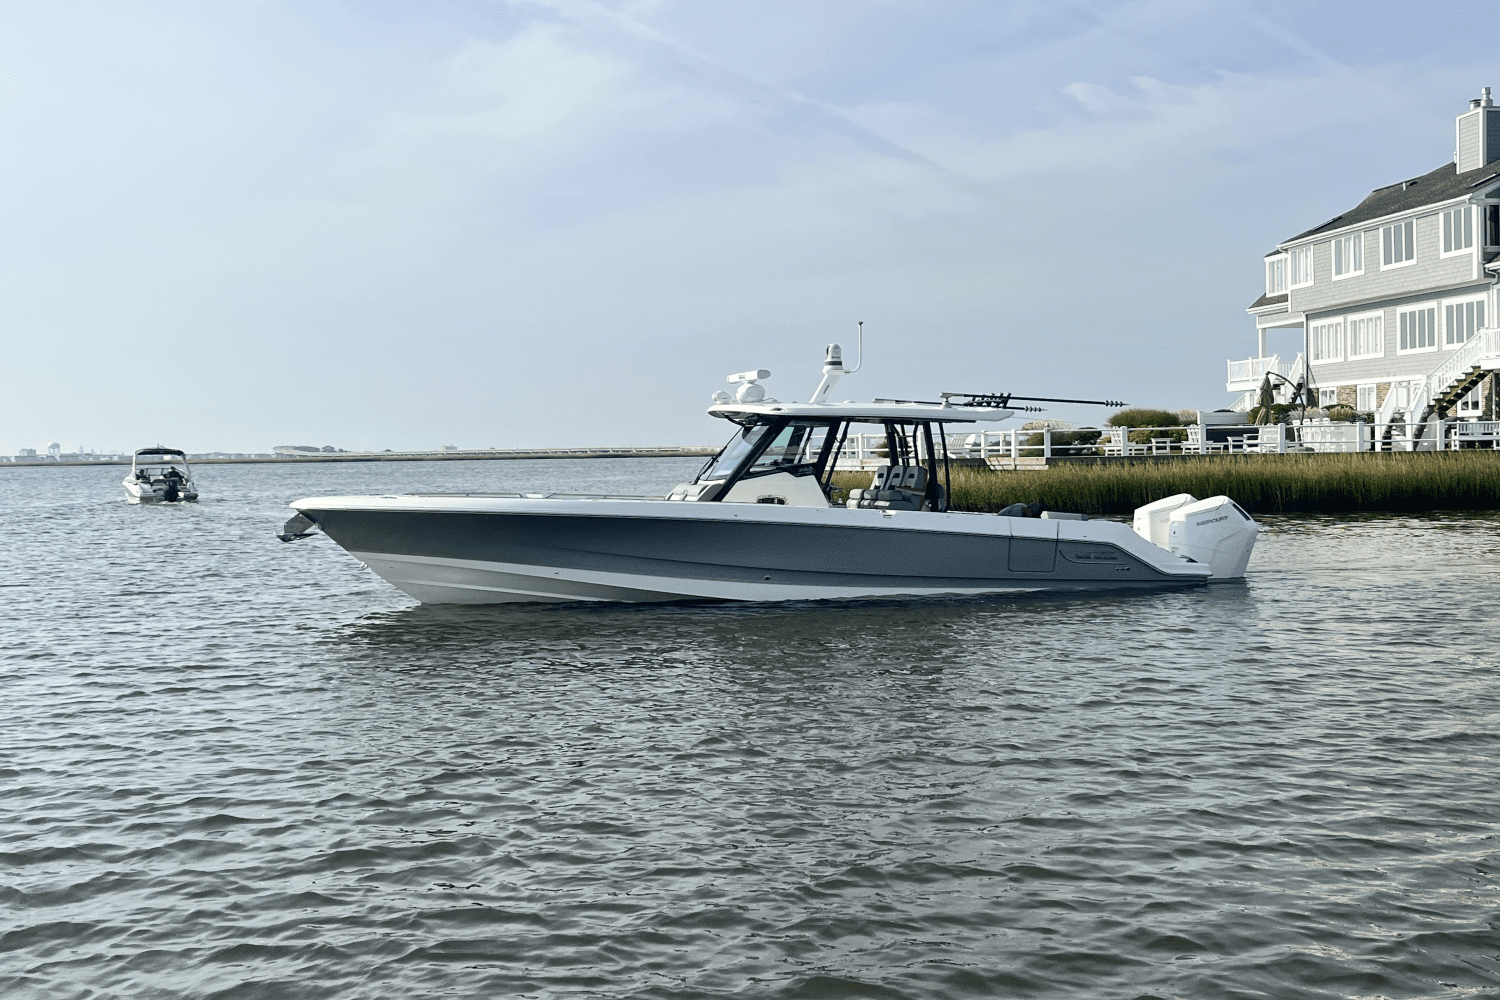 Premium Photo  Aluminum blue fishing boat with a motor near the lake shore  fishing active recreation